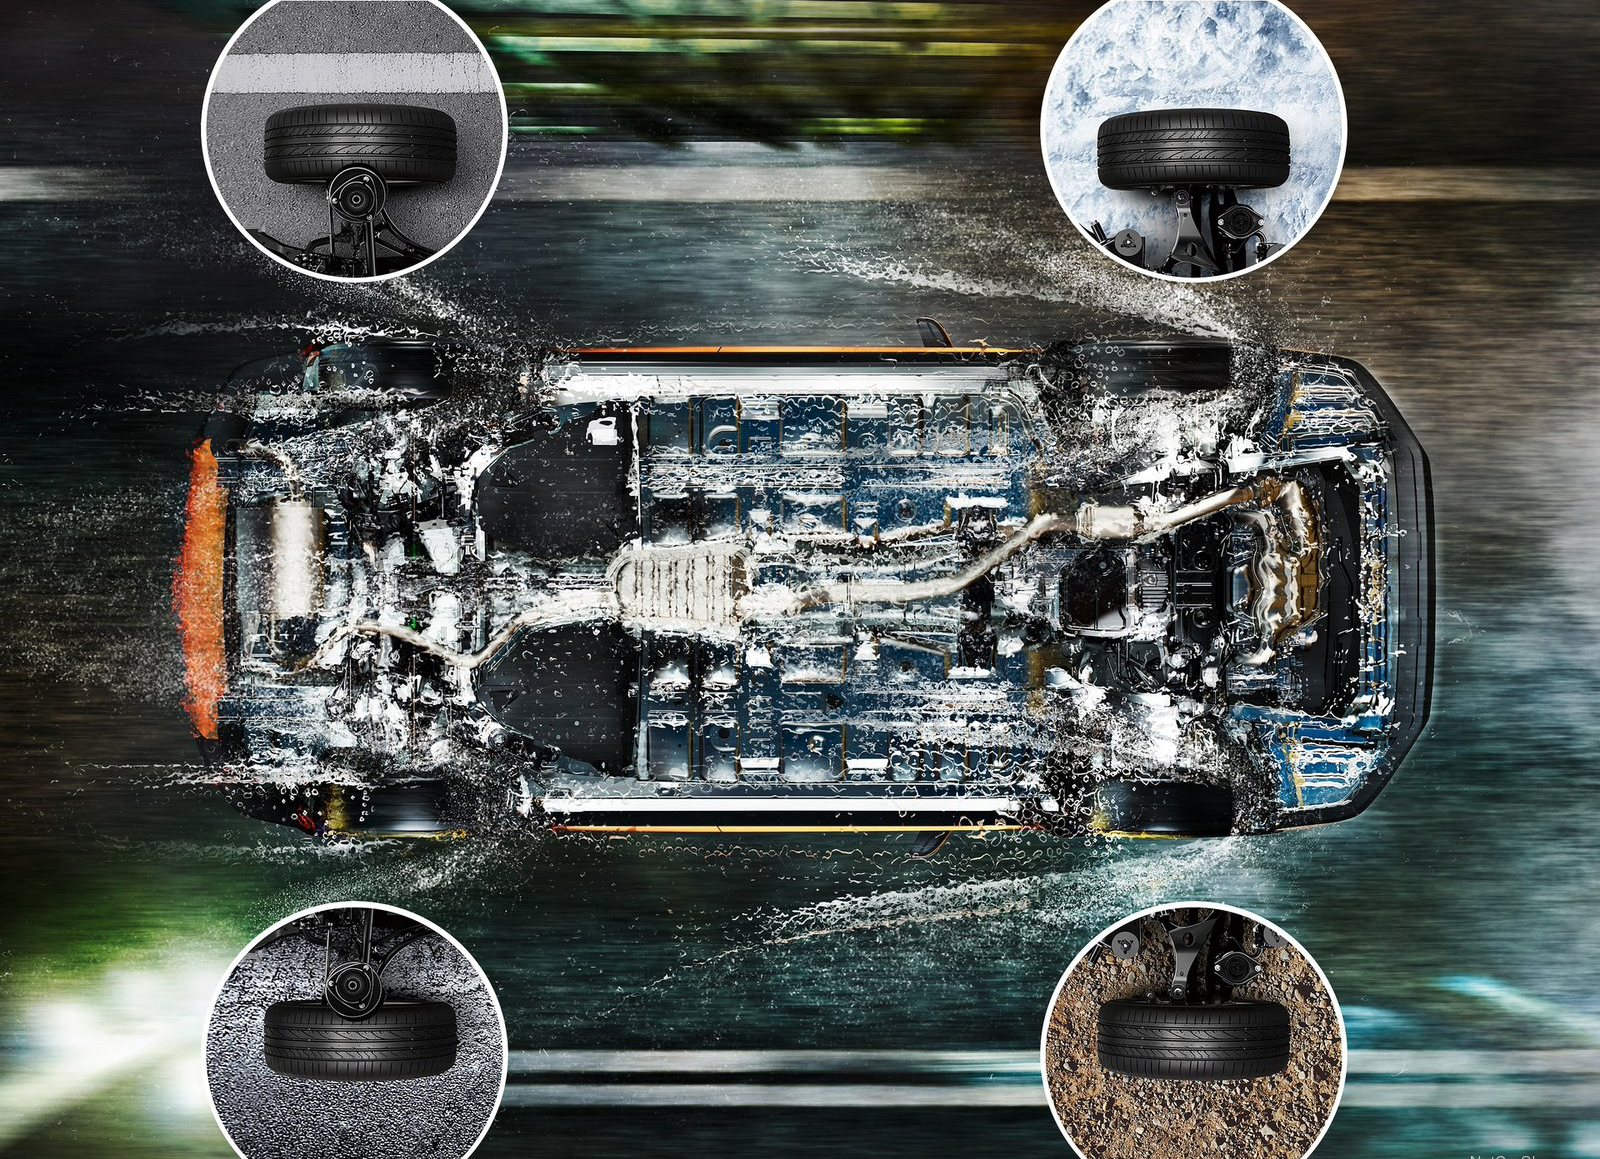 Sistemul Symmetrical All-Wheel-Drive face echipa cu Subaru Dynamic Chassis Control Concept